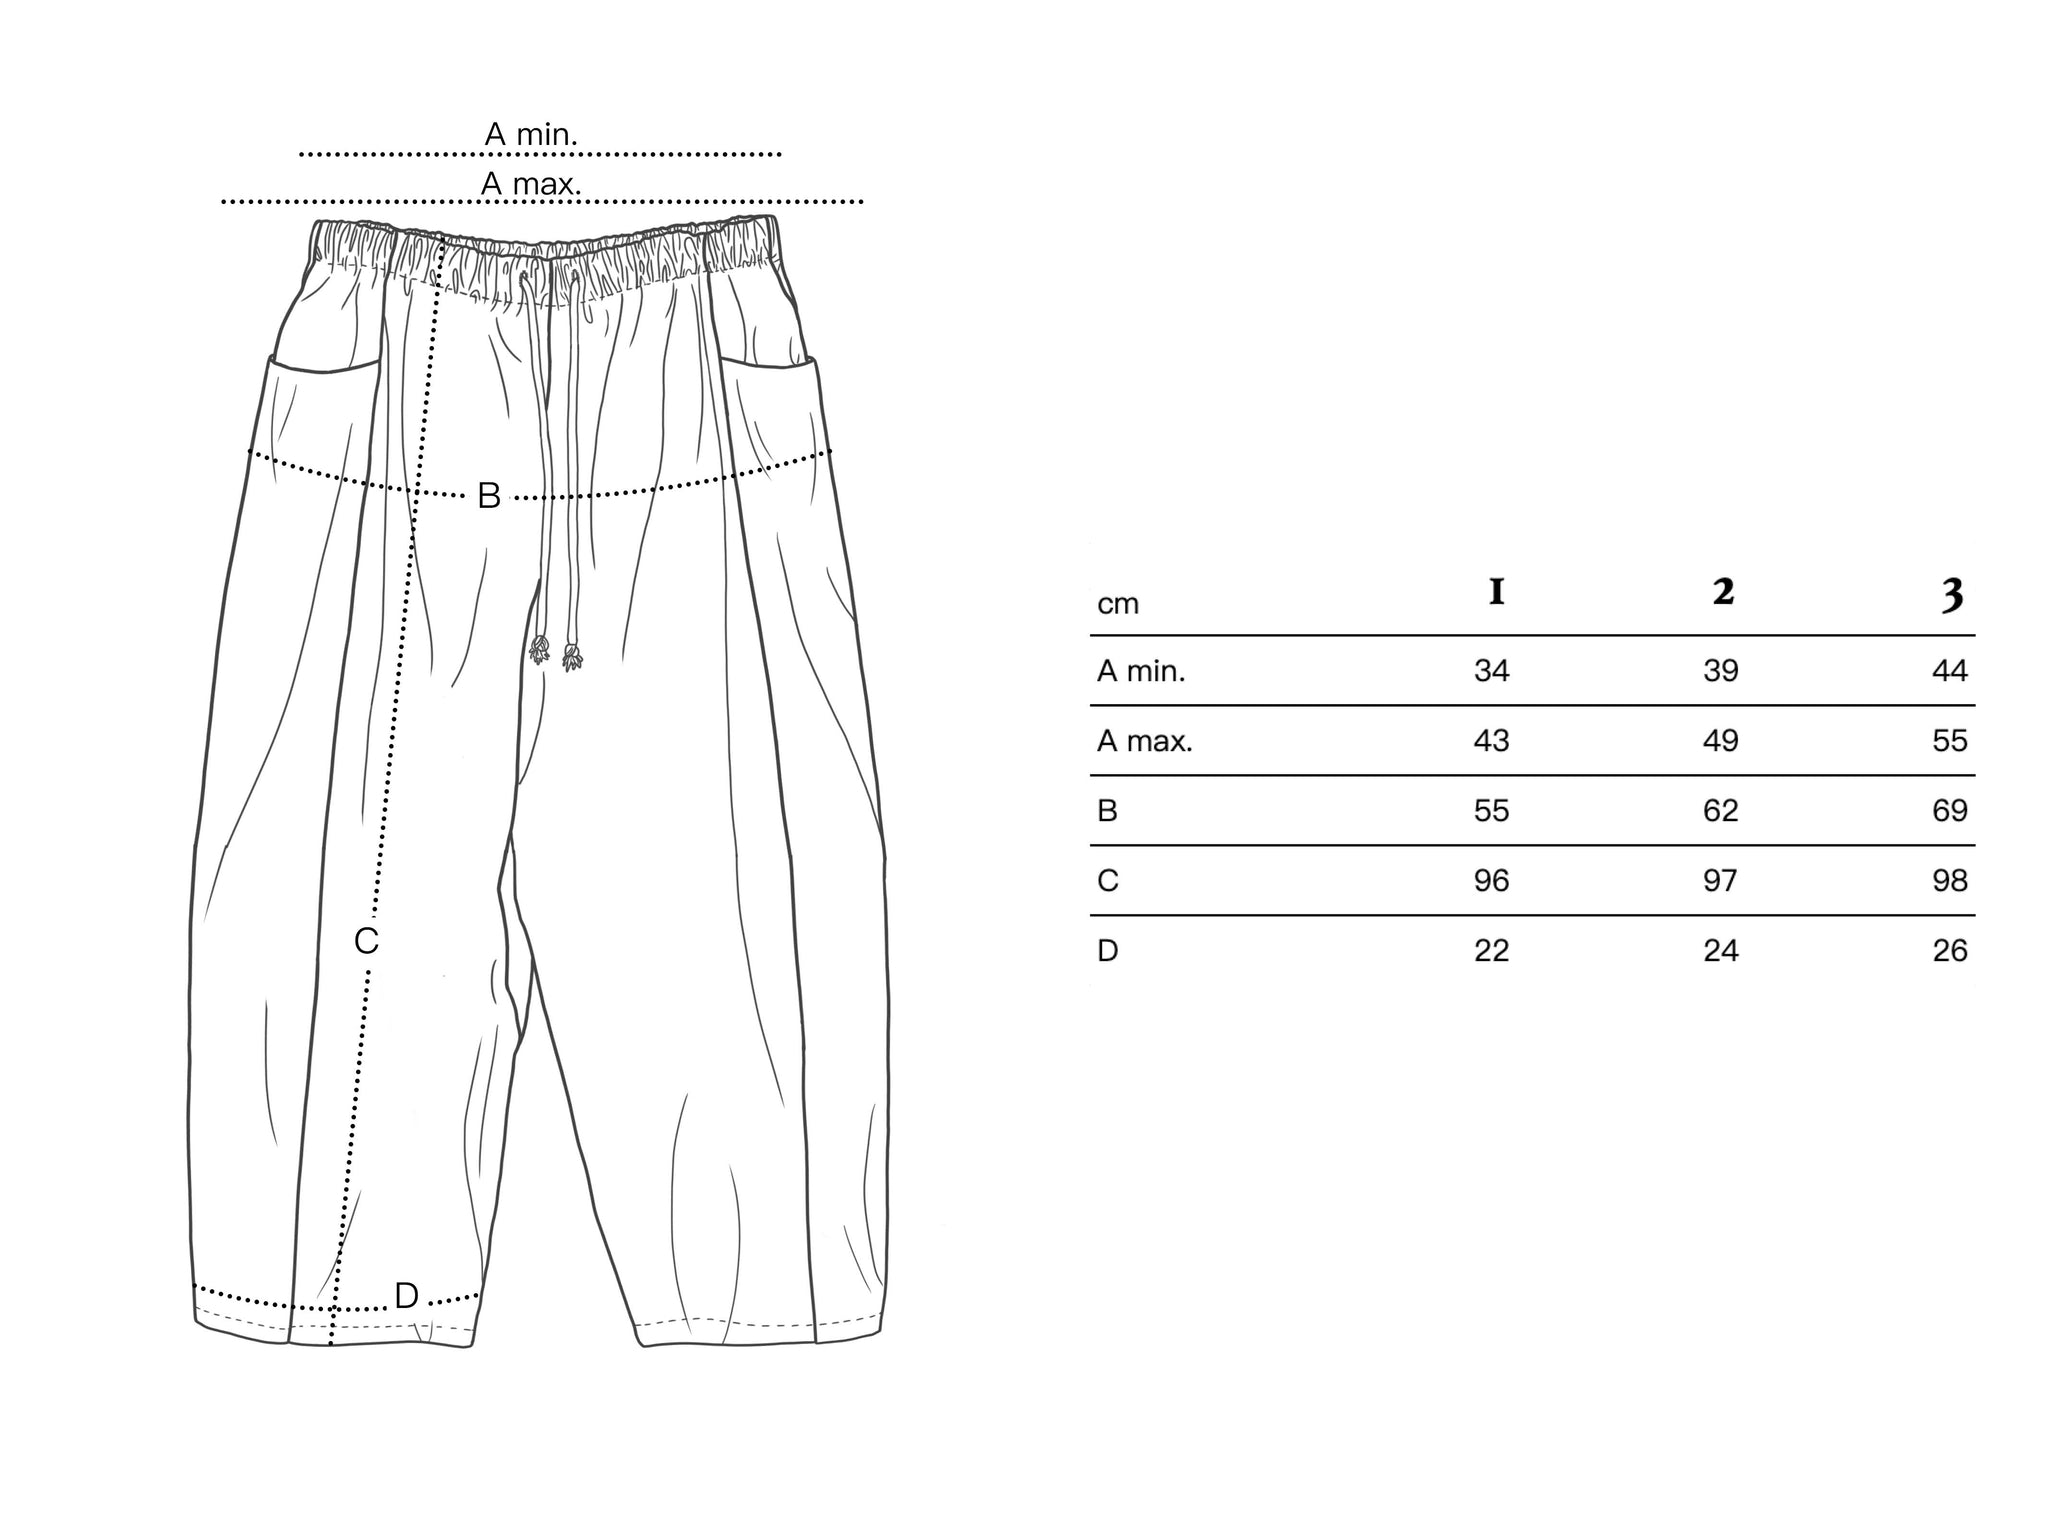 Adulte - Pantalon Chapitre 2 - Size guide